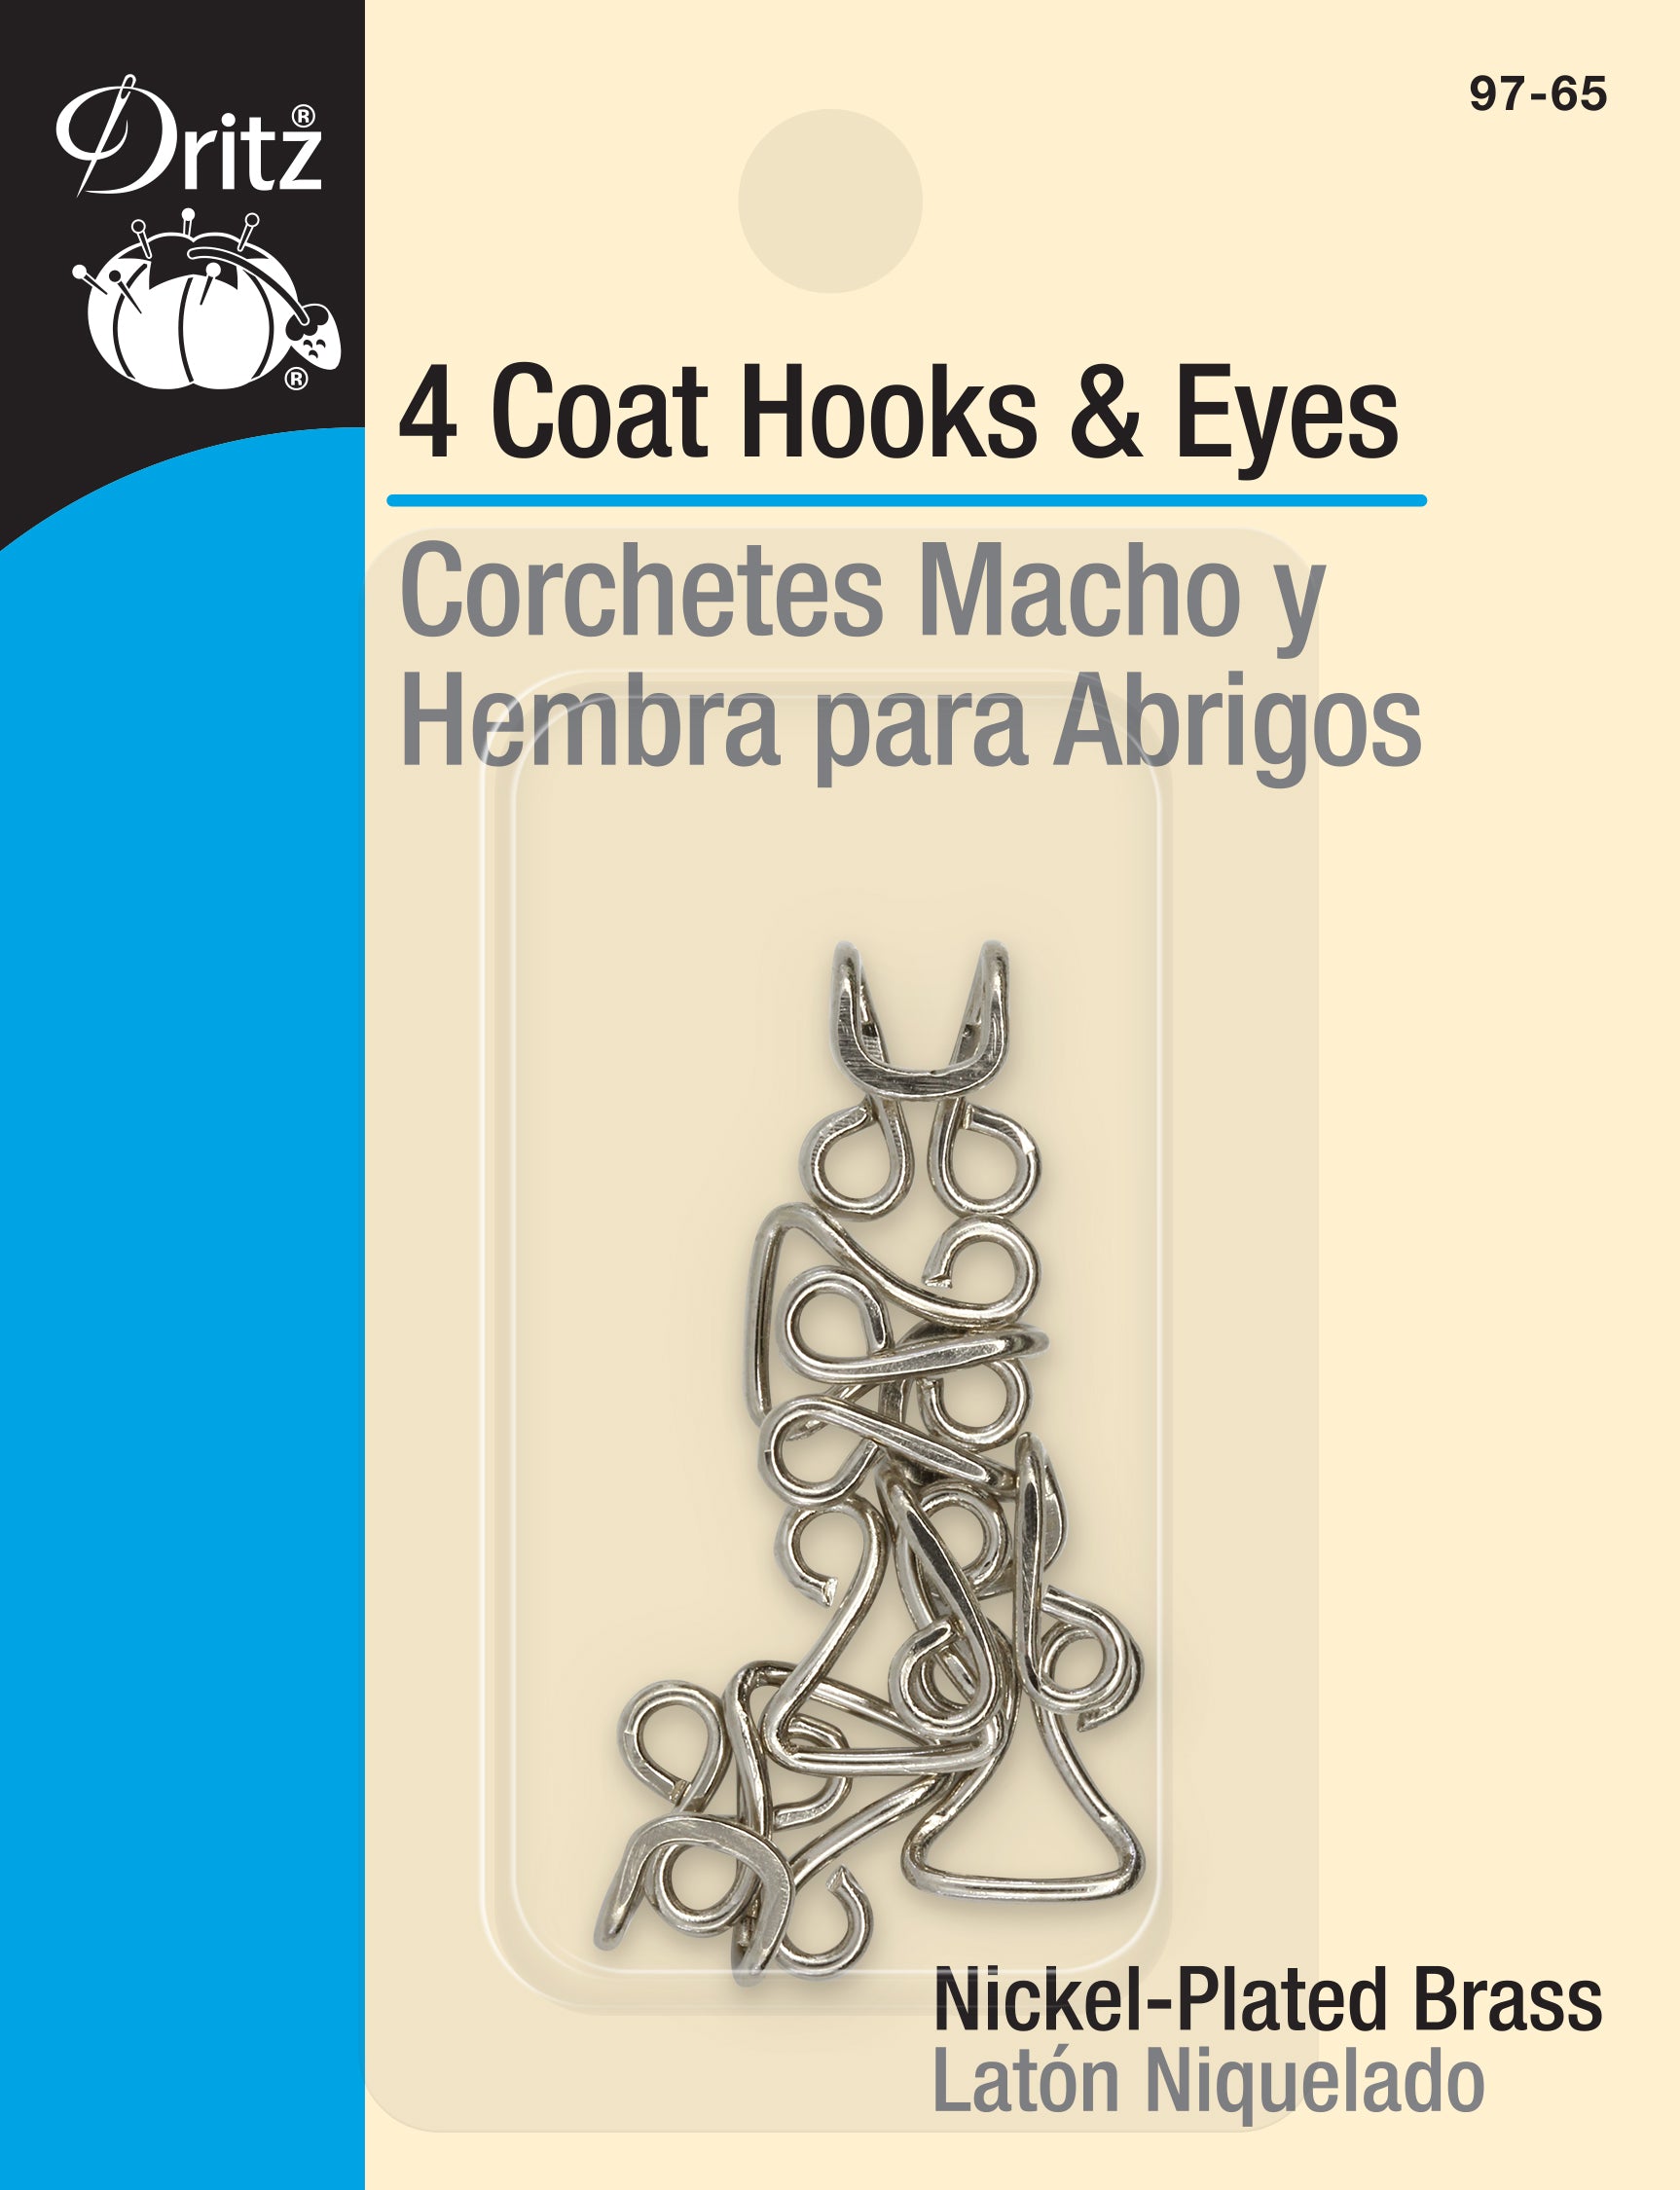 Hook & Eye Closures by Dritz